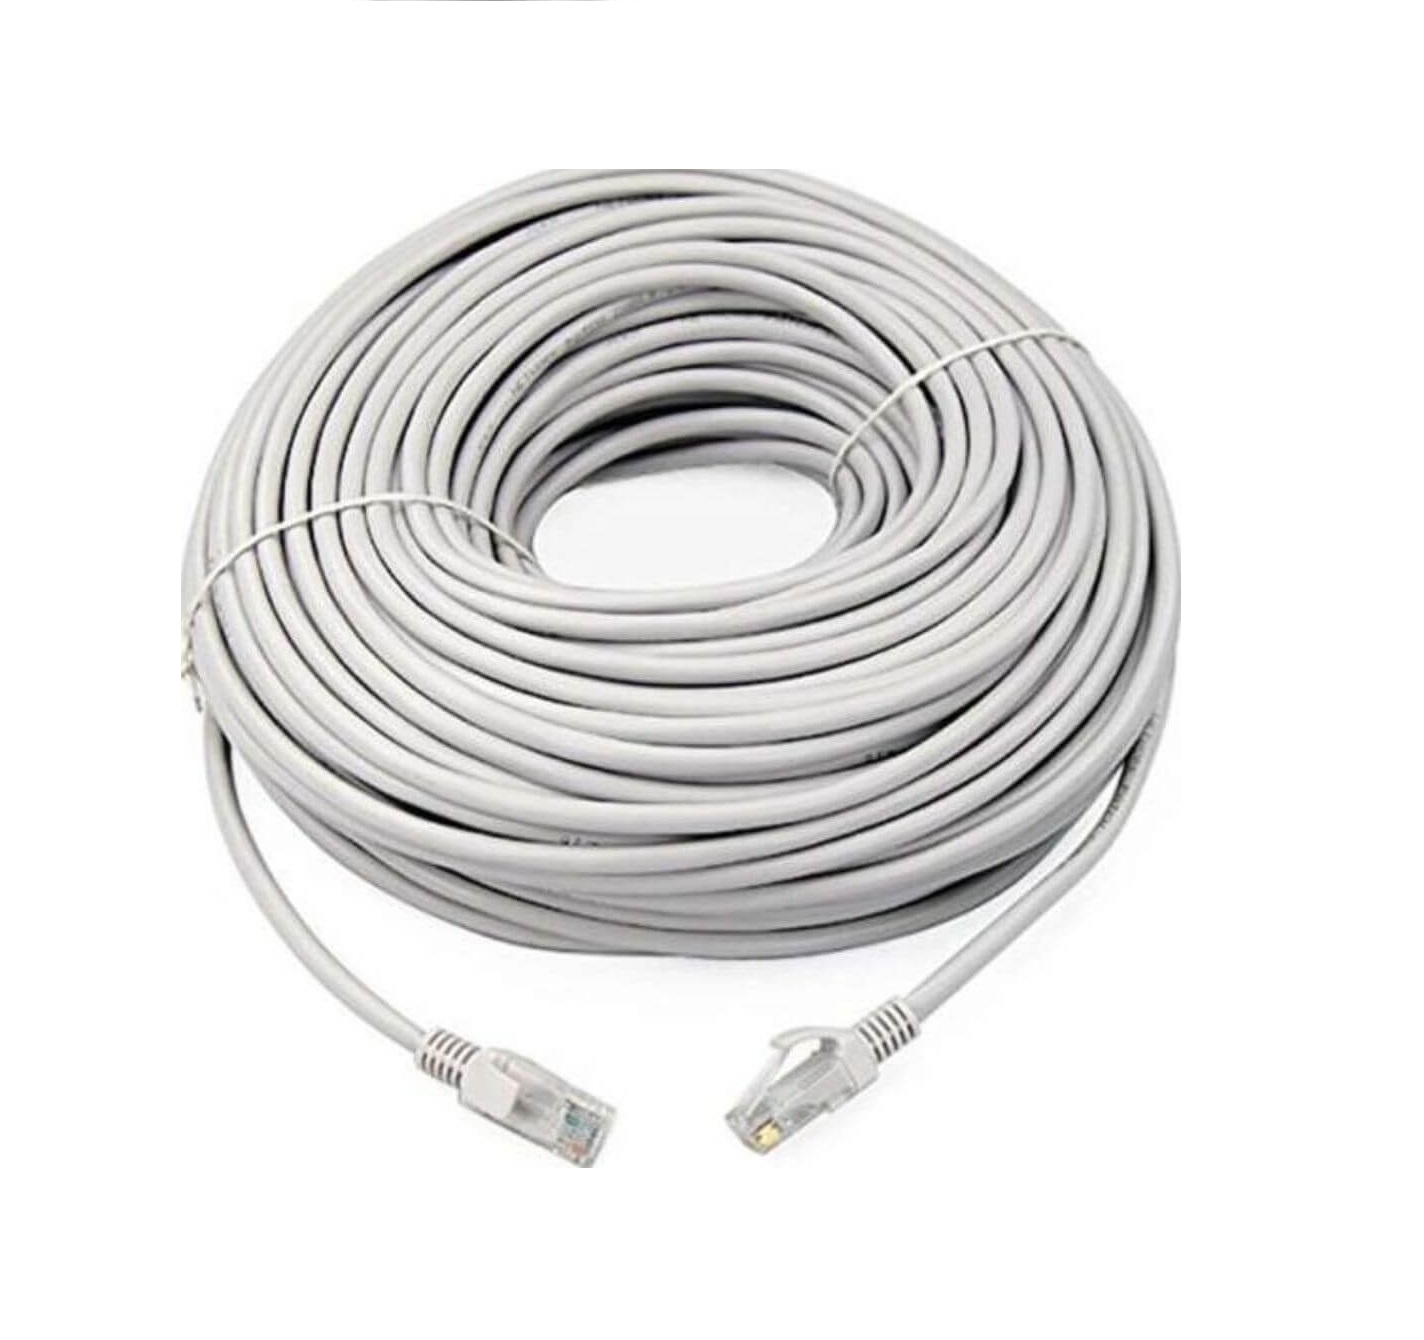 Cablu UTP Retea, Alb/Gri, Ethernet Cat 5e, 50m Lungime – Cablu Patch de Internet cu Mufa, Conector RJ45